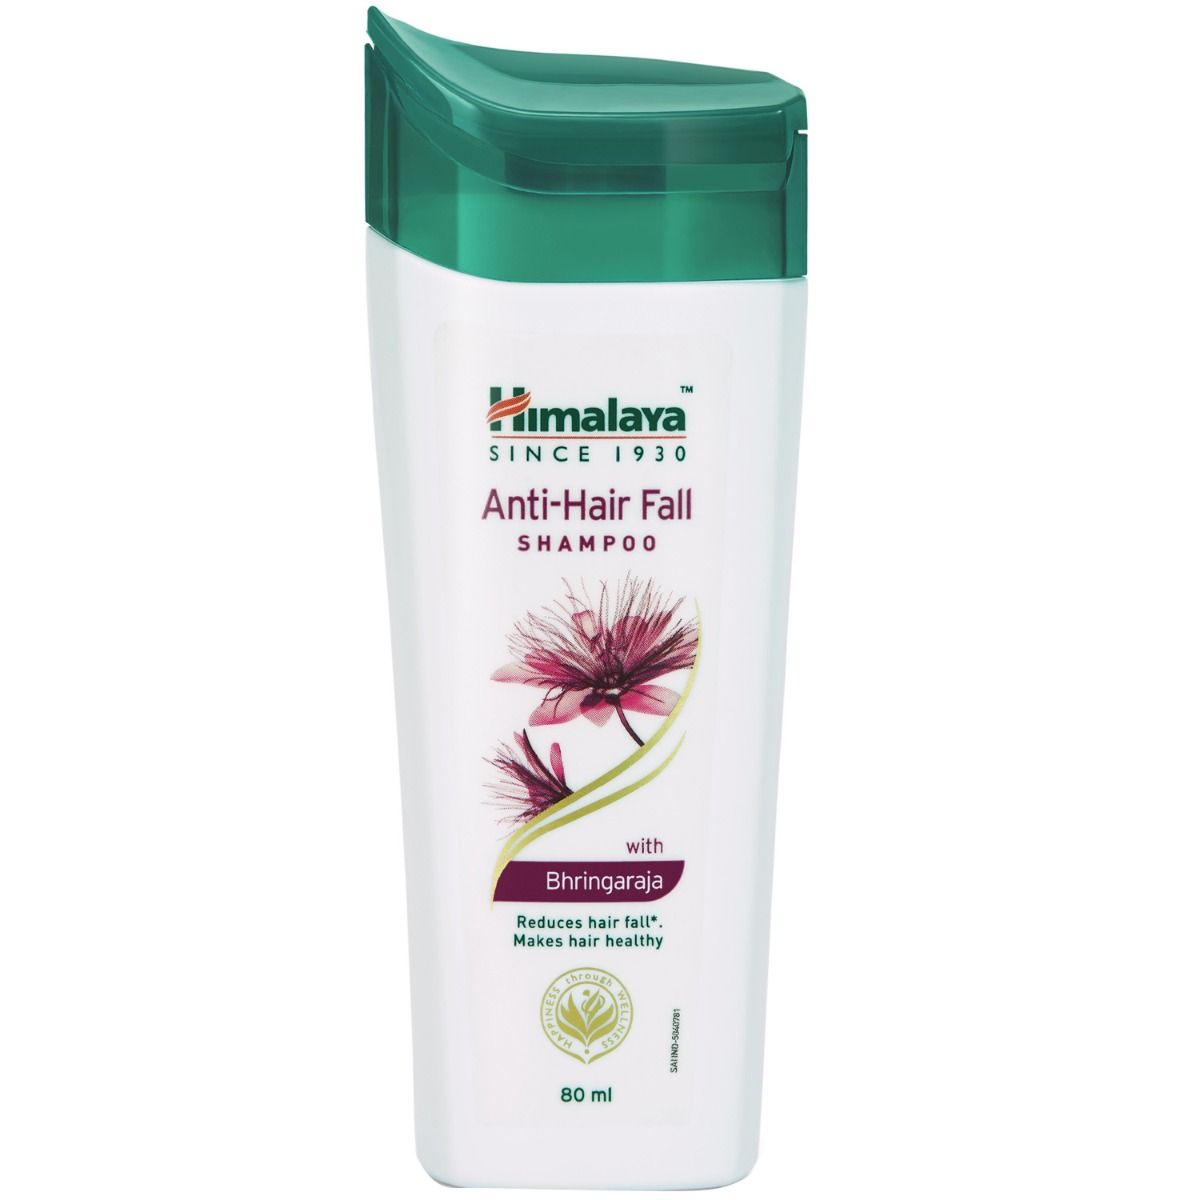 Himalaya Anti Hair Loss Cream, 100 ml Price, Uses, Side Effects,  Composition - Apollo Pharmacy